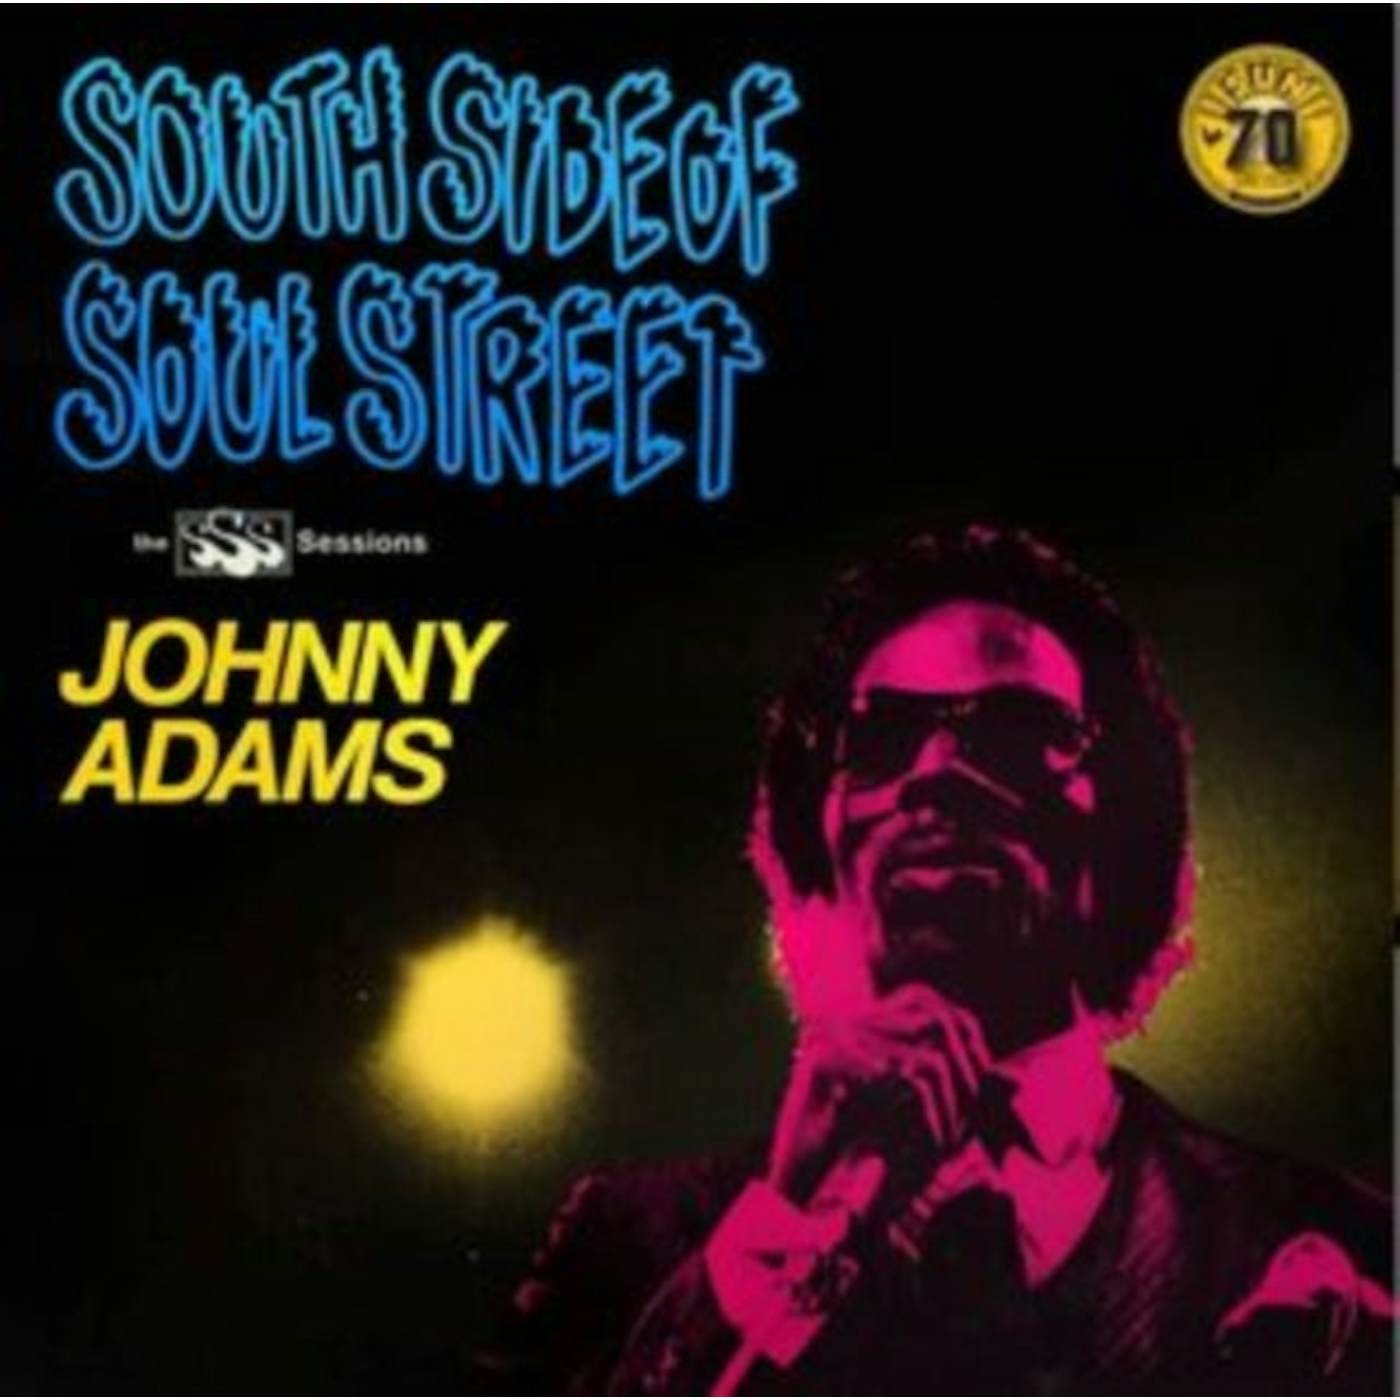 Johnny Adams LP - South Side Of Soul Street (Vinyl)